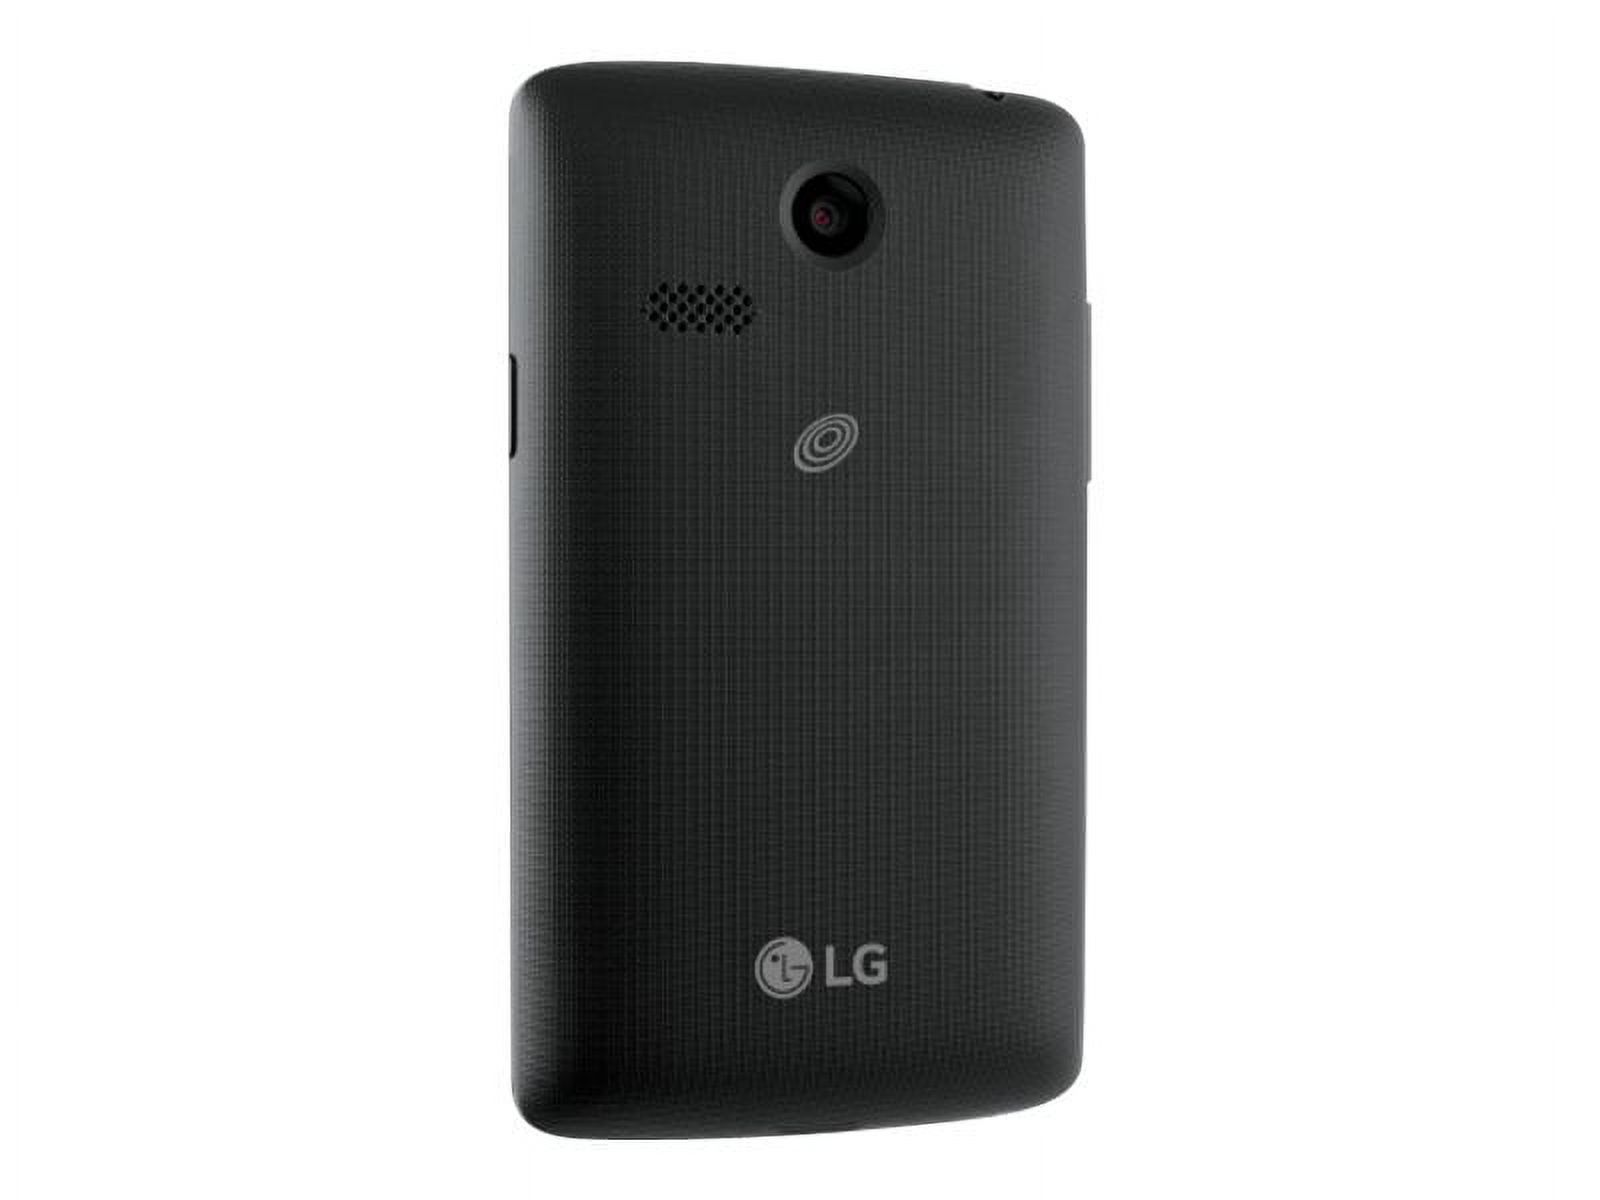 LG L16C - 3G smartphone / Internal Memory 4 GB - microSD slot - LCD display - 3.8" - 320 x 480 pixels - rear camera 3 MP - TracFone - image 5 of 8